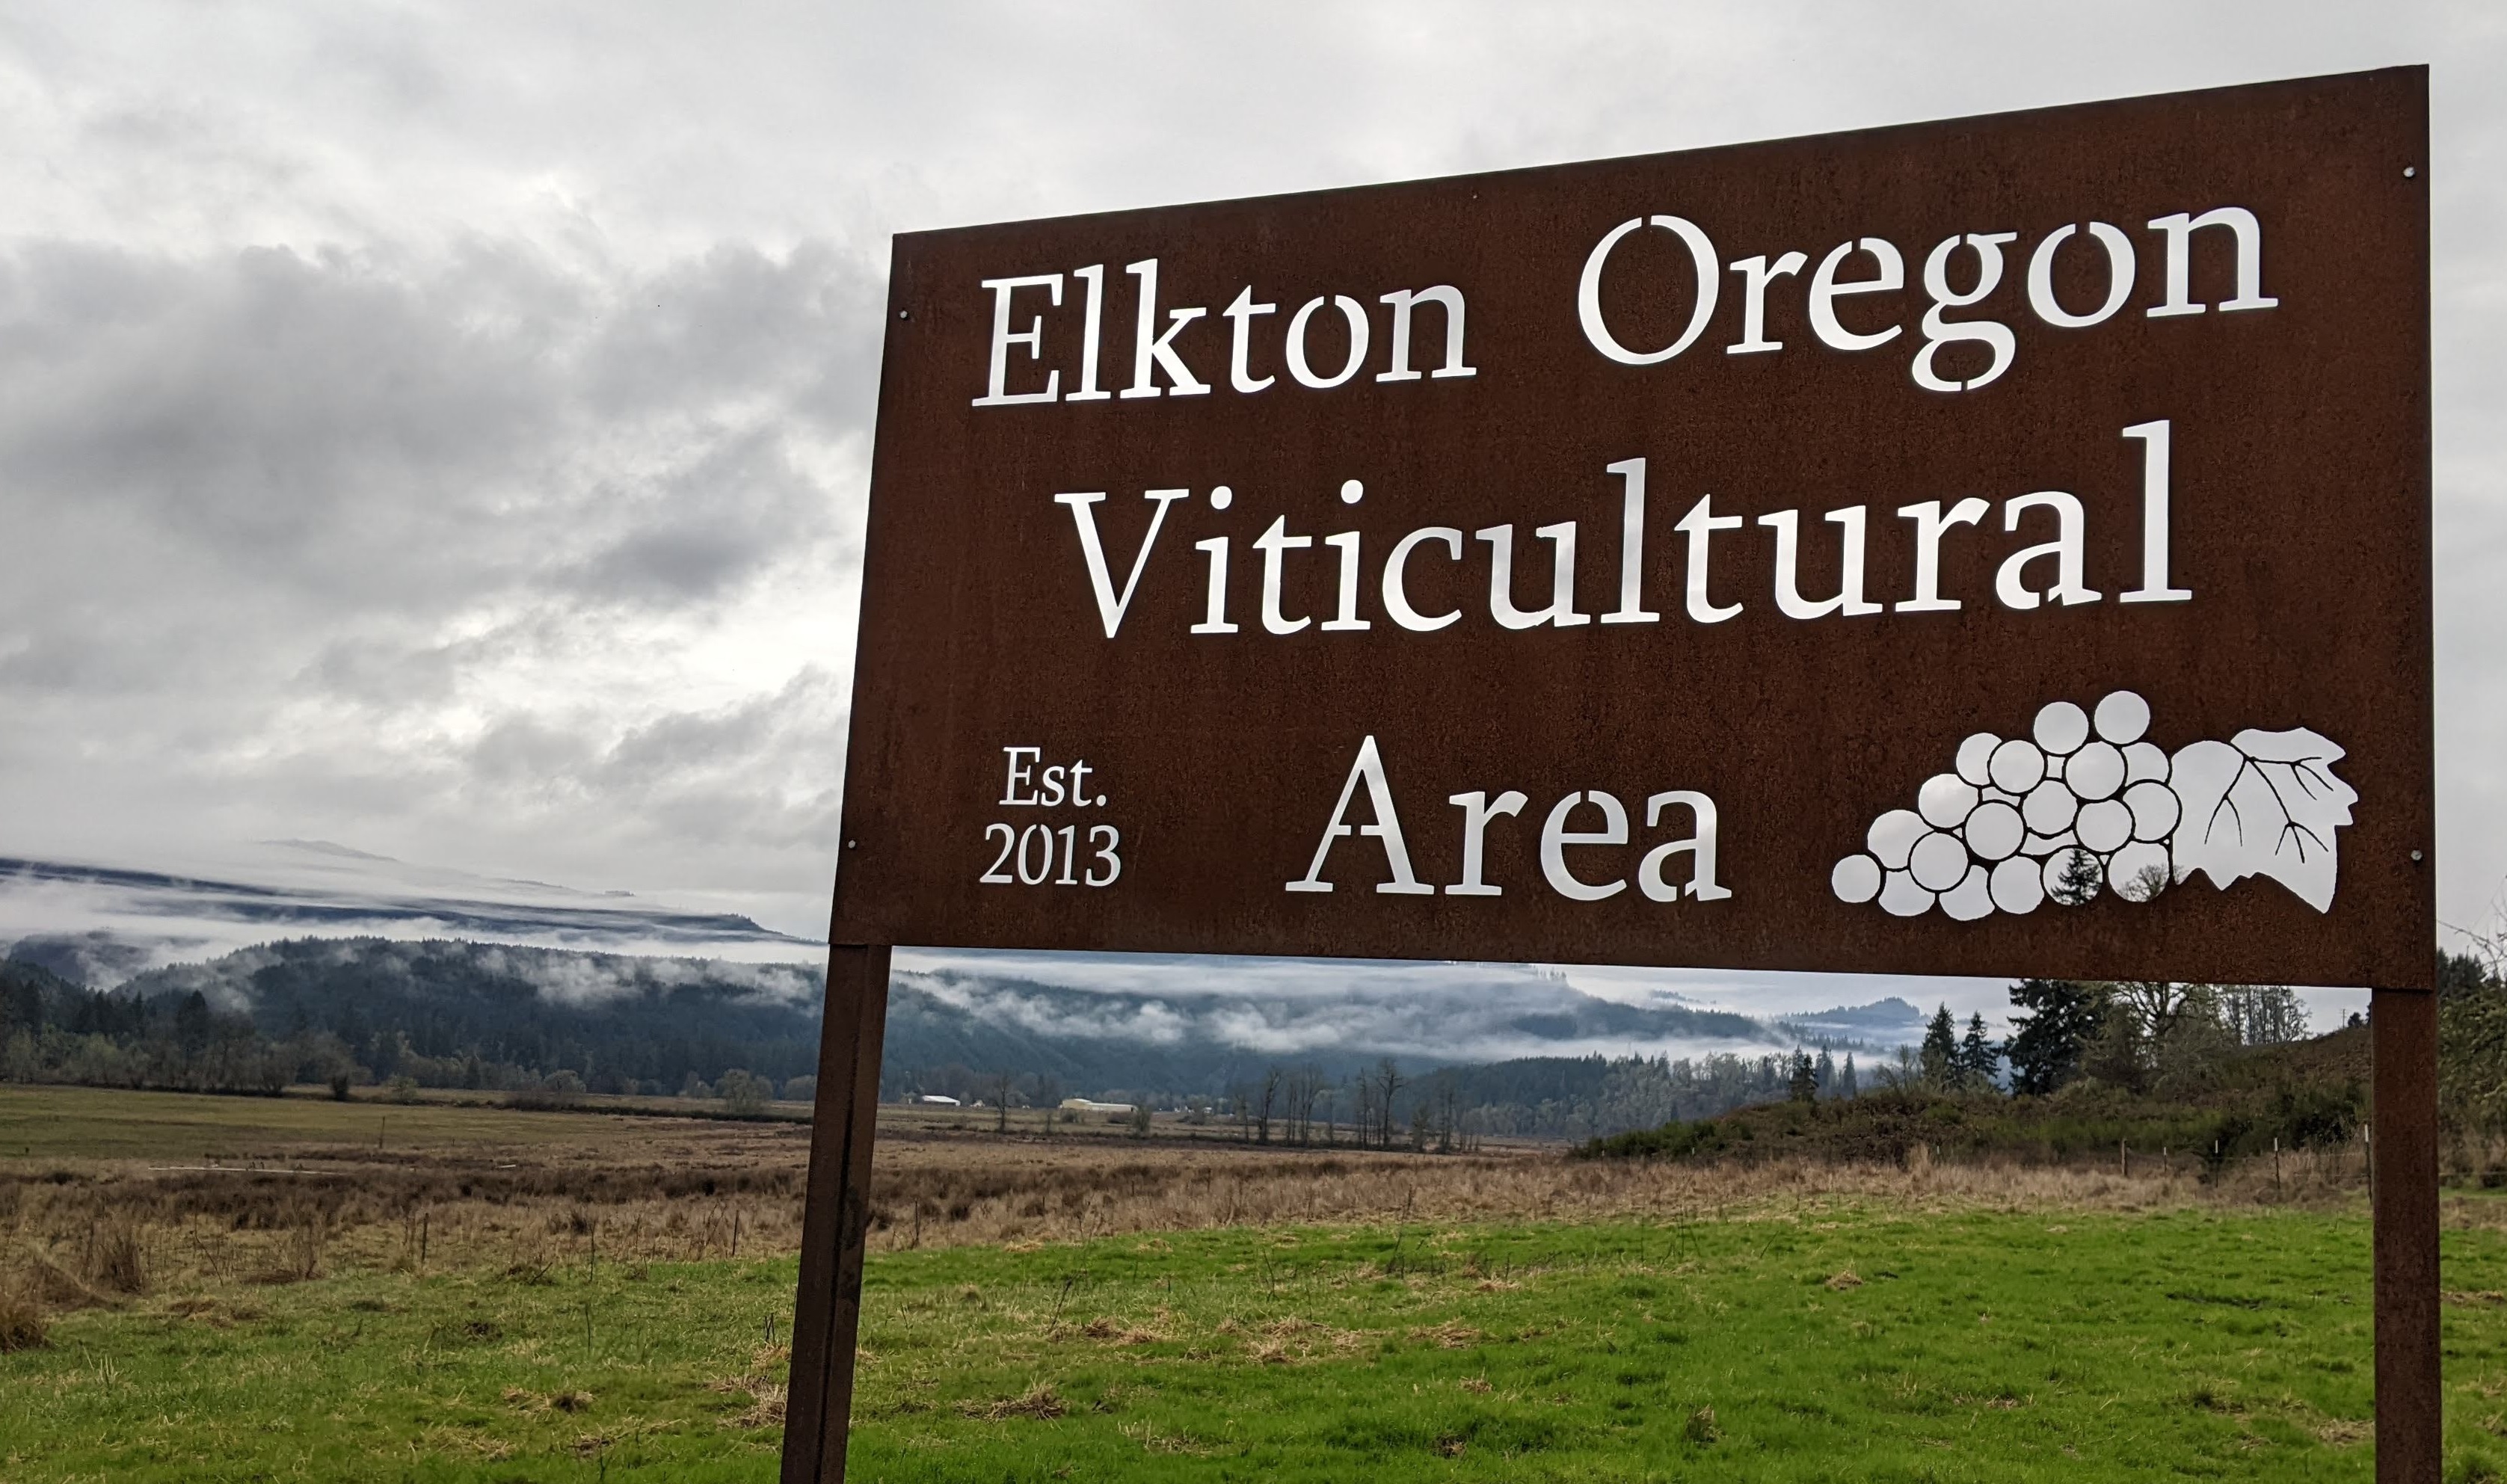 Elkton Oregon Vinticultural Area Grapes Mountains.